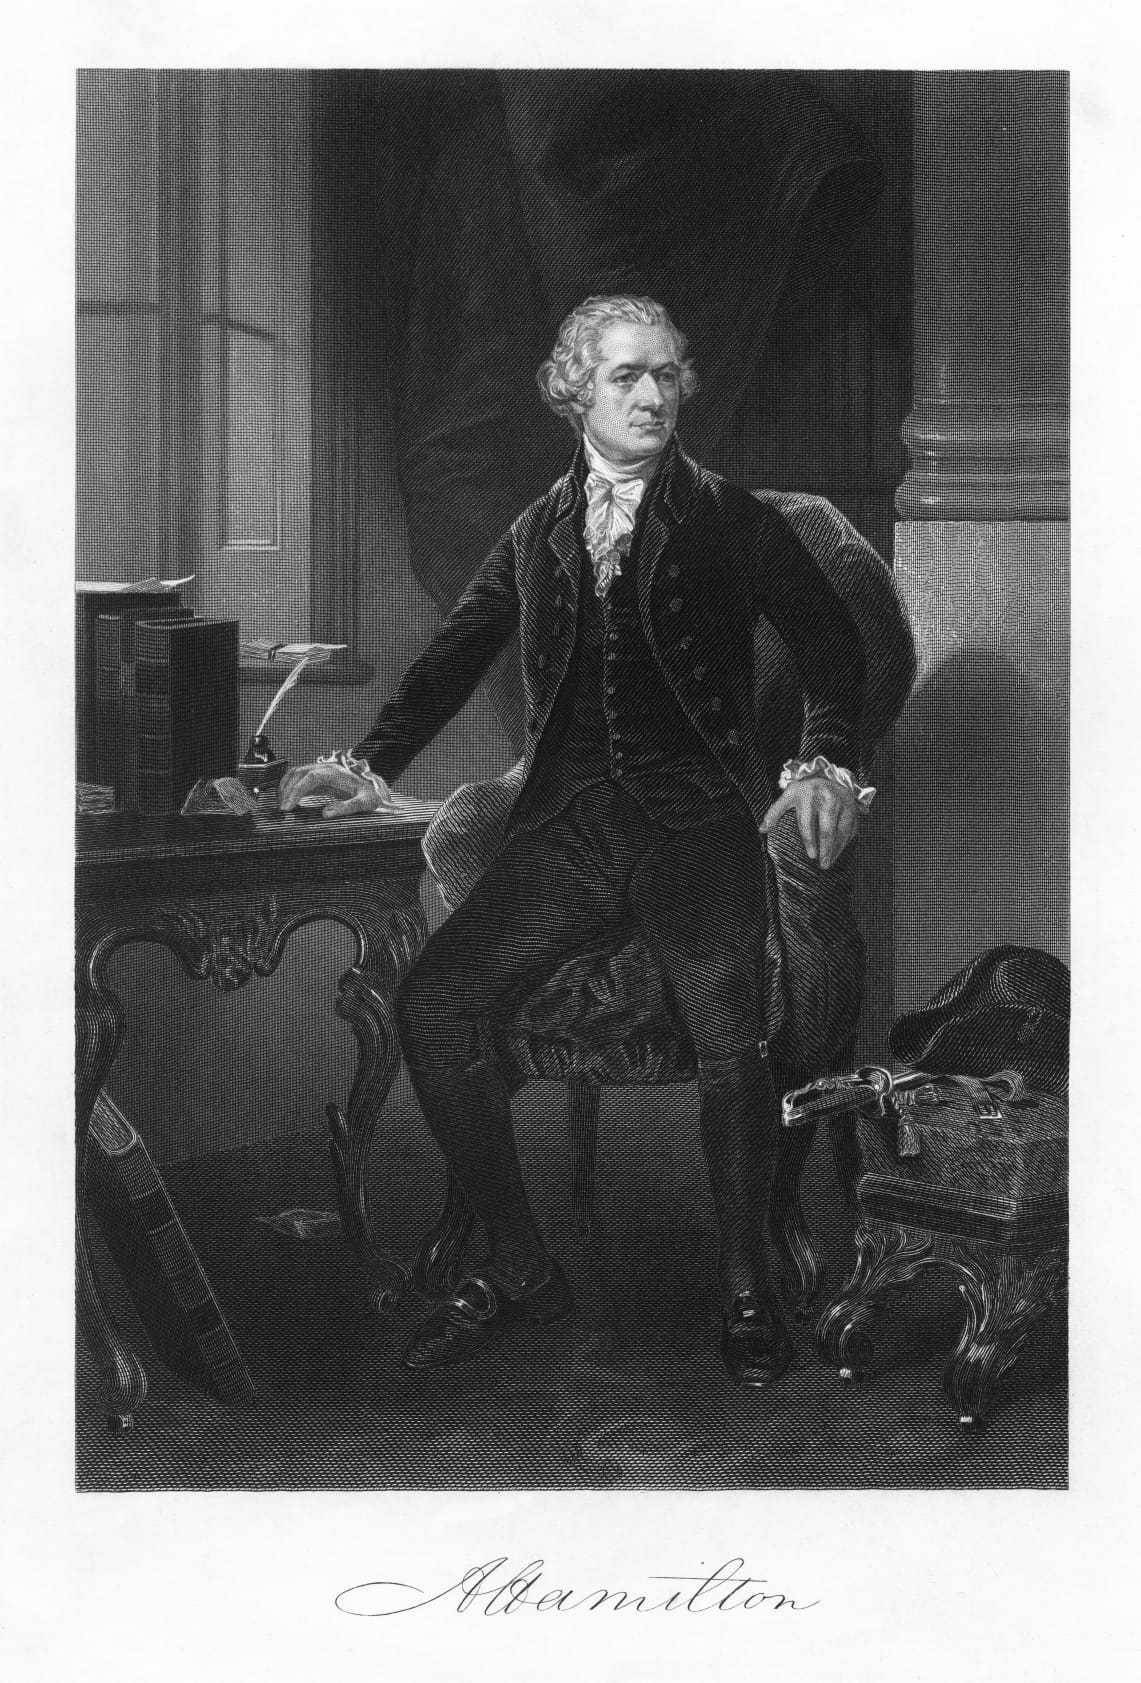 A black and white portrait of Alexander Hamilton.